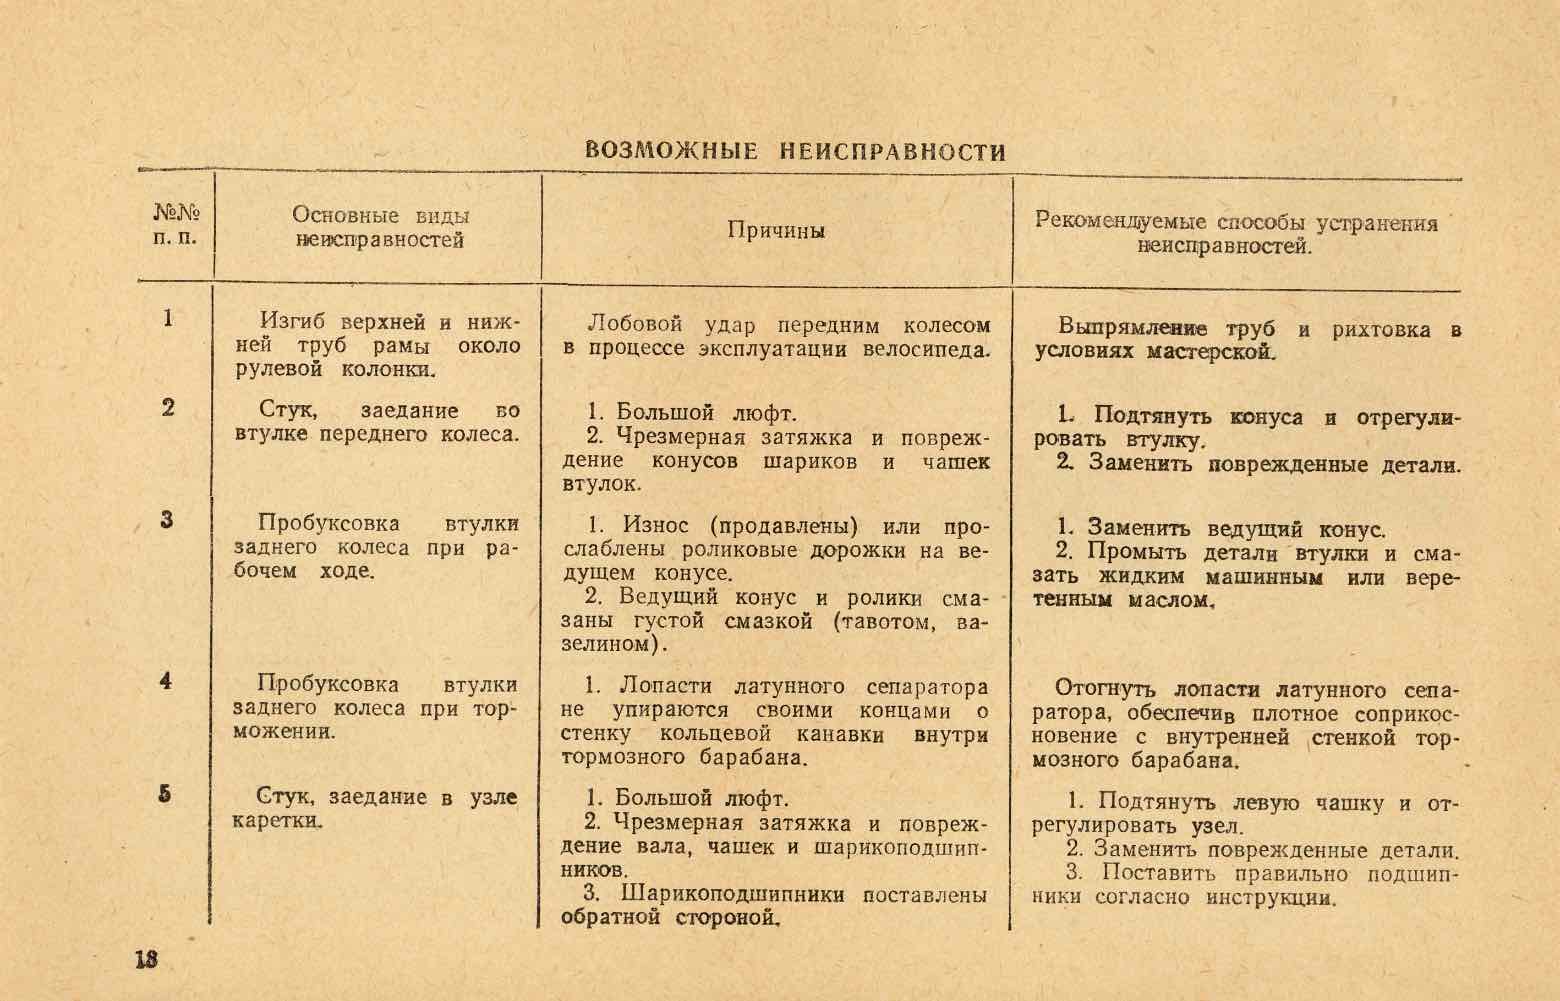 Kharkov - instructions for B130K & B134 - page 18 main image